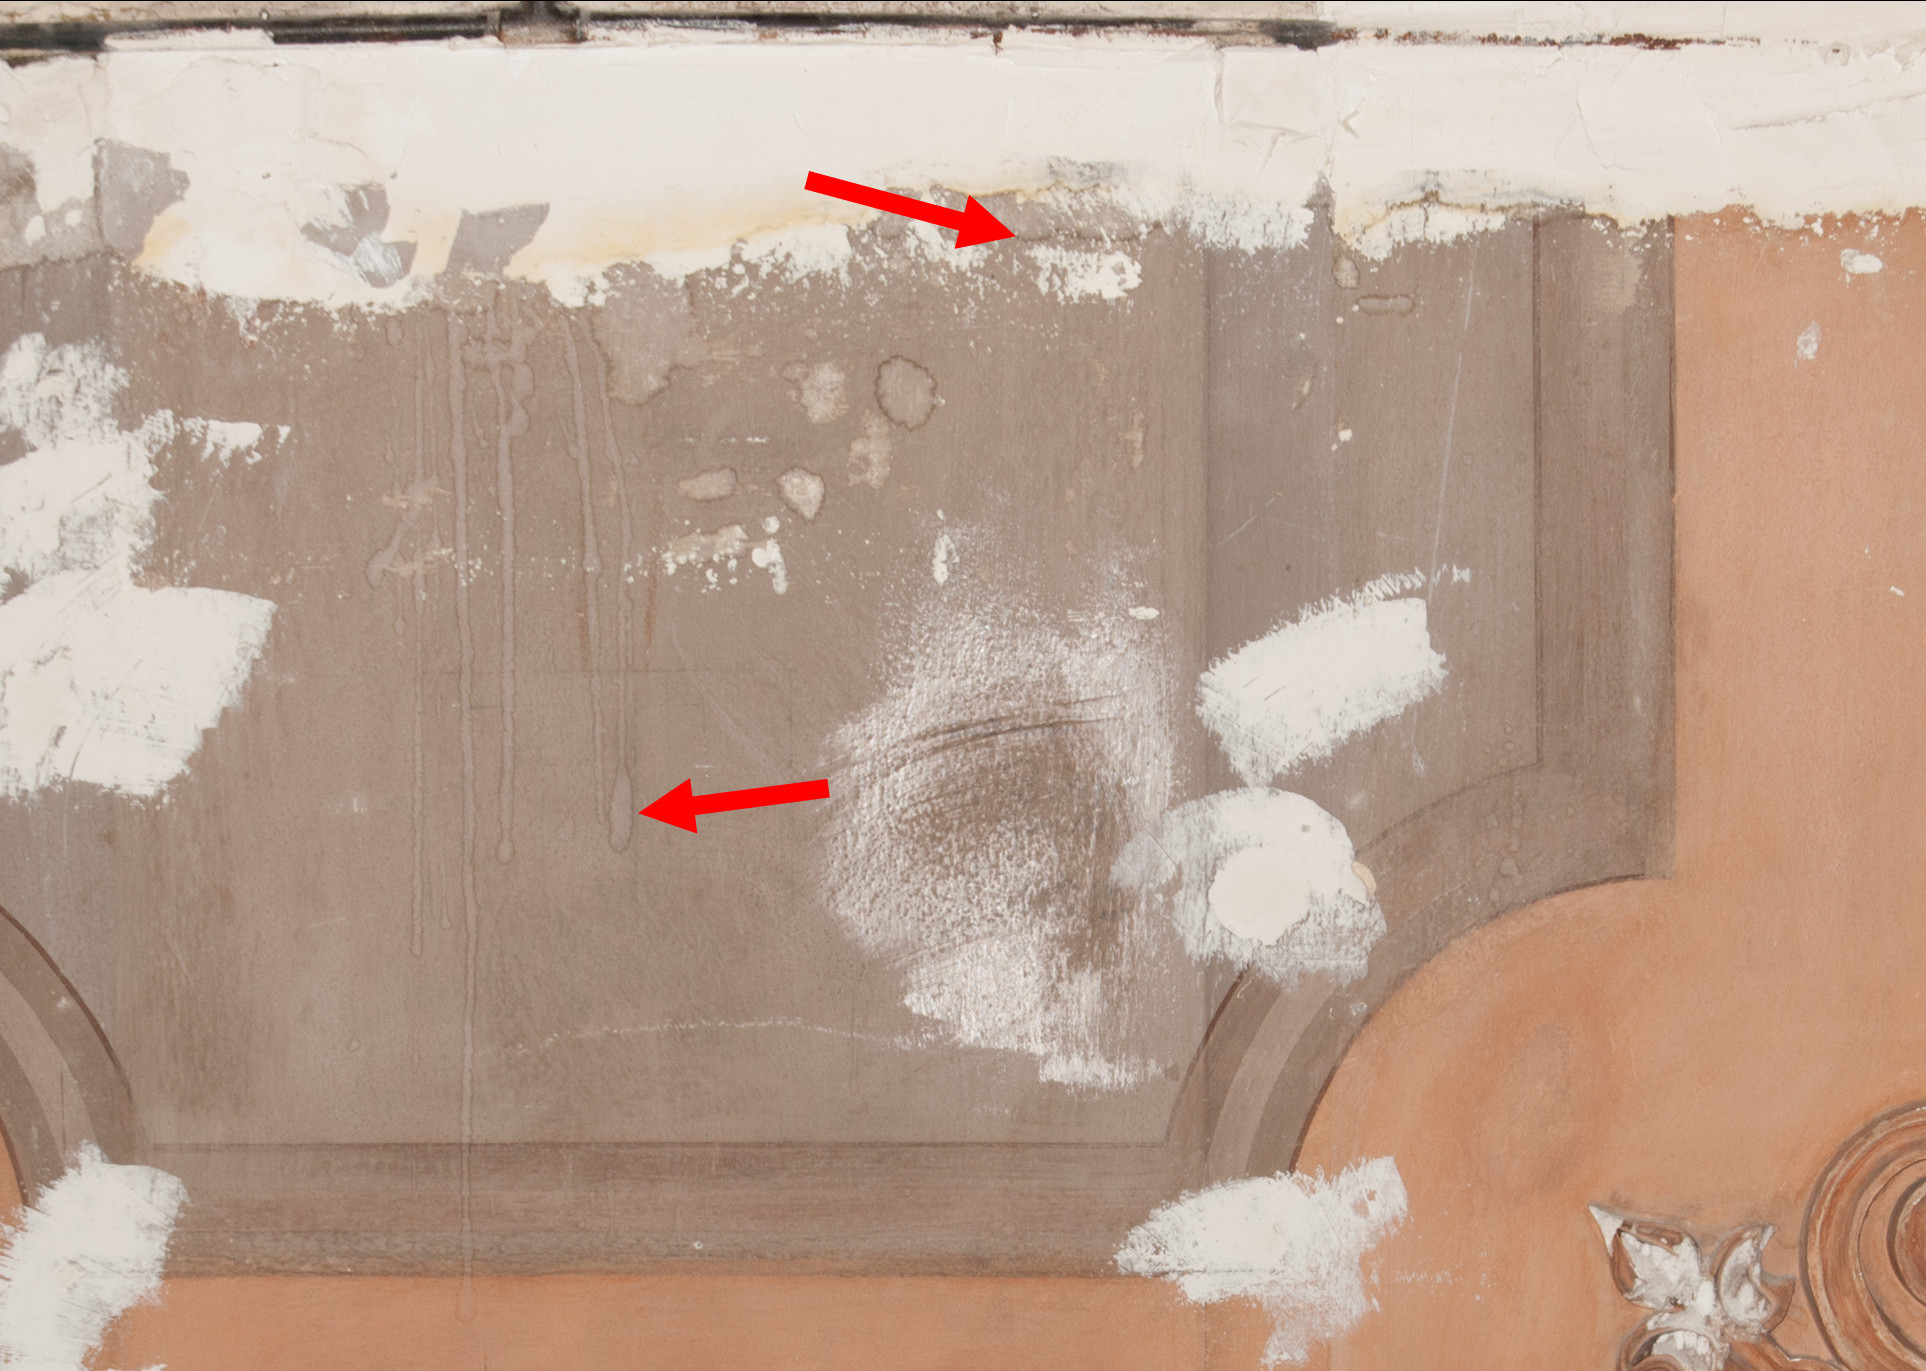 lath and plaster walls paint peeling